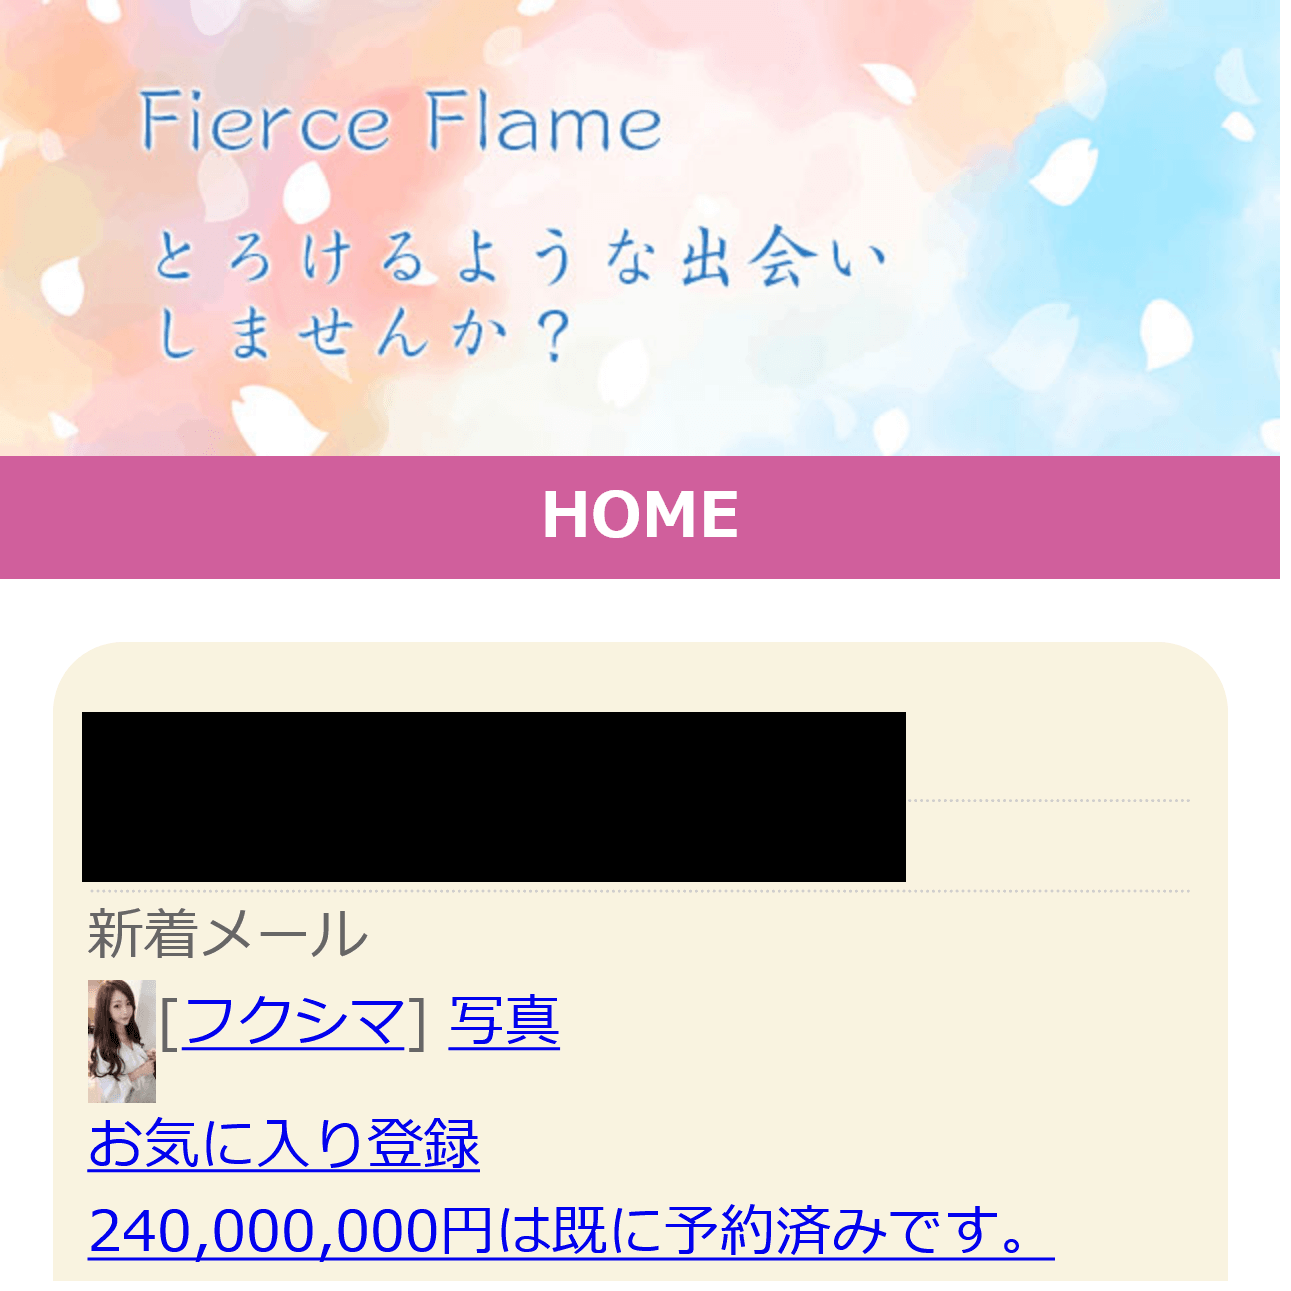 Fierce flame / フィアスフレイム